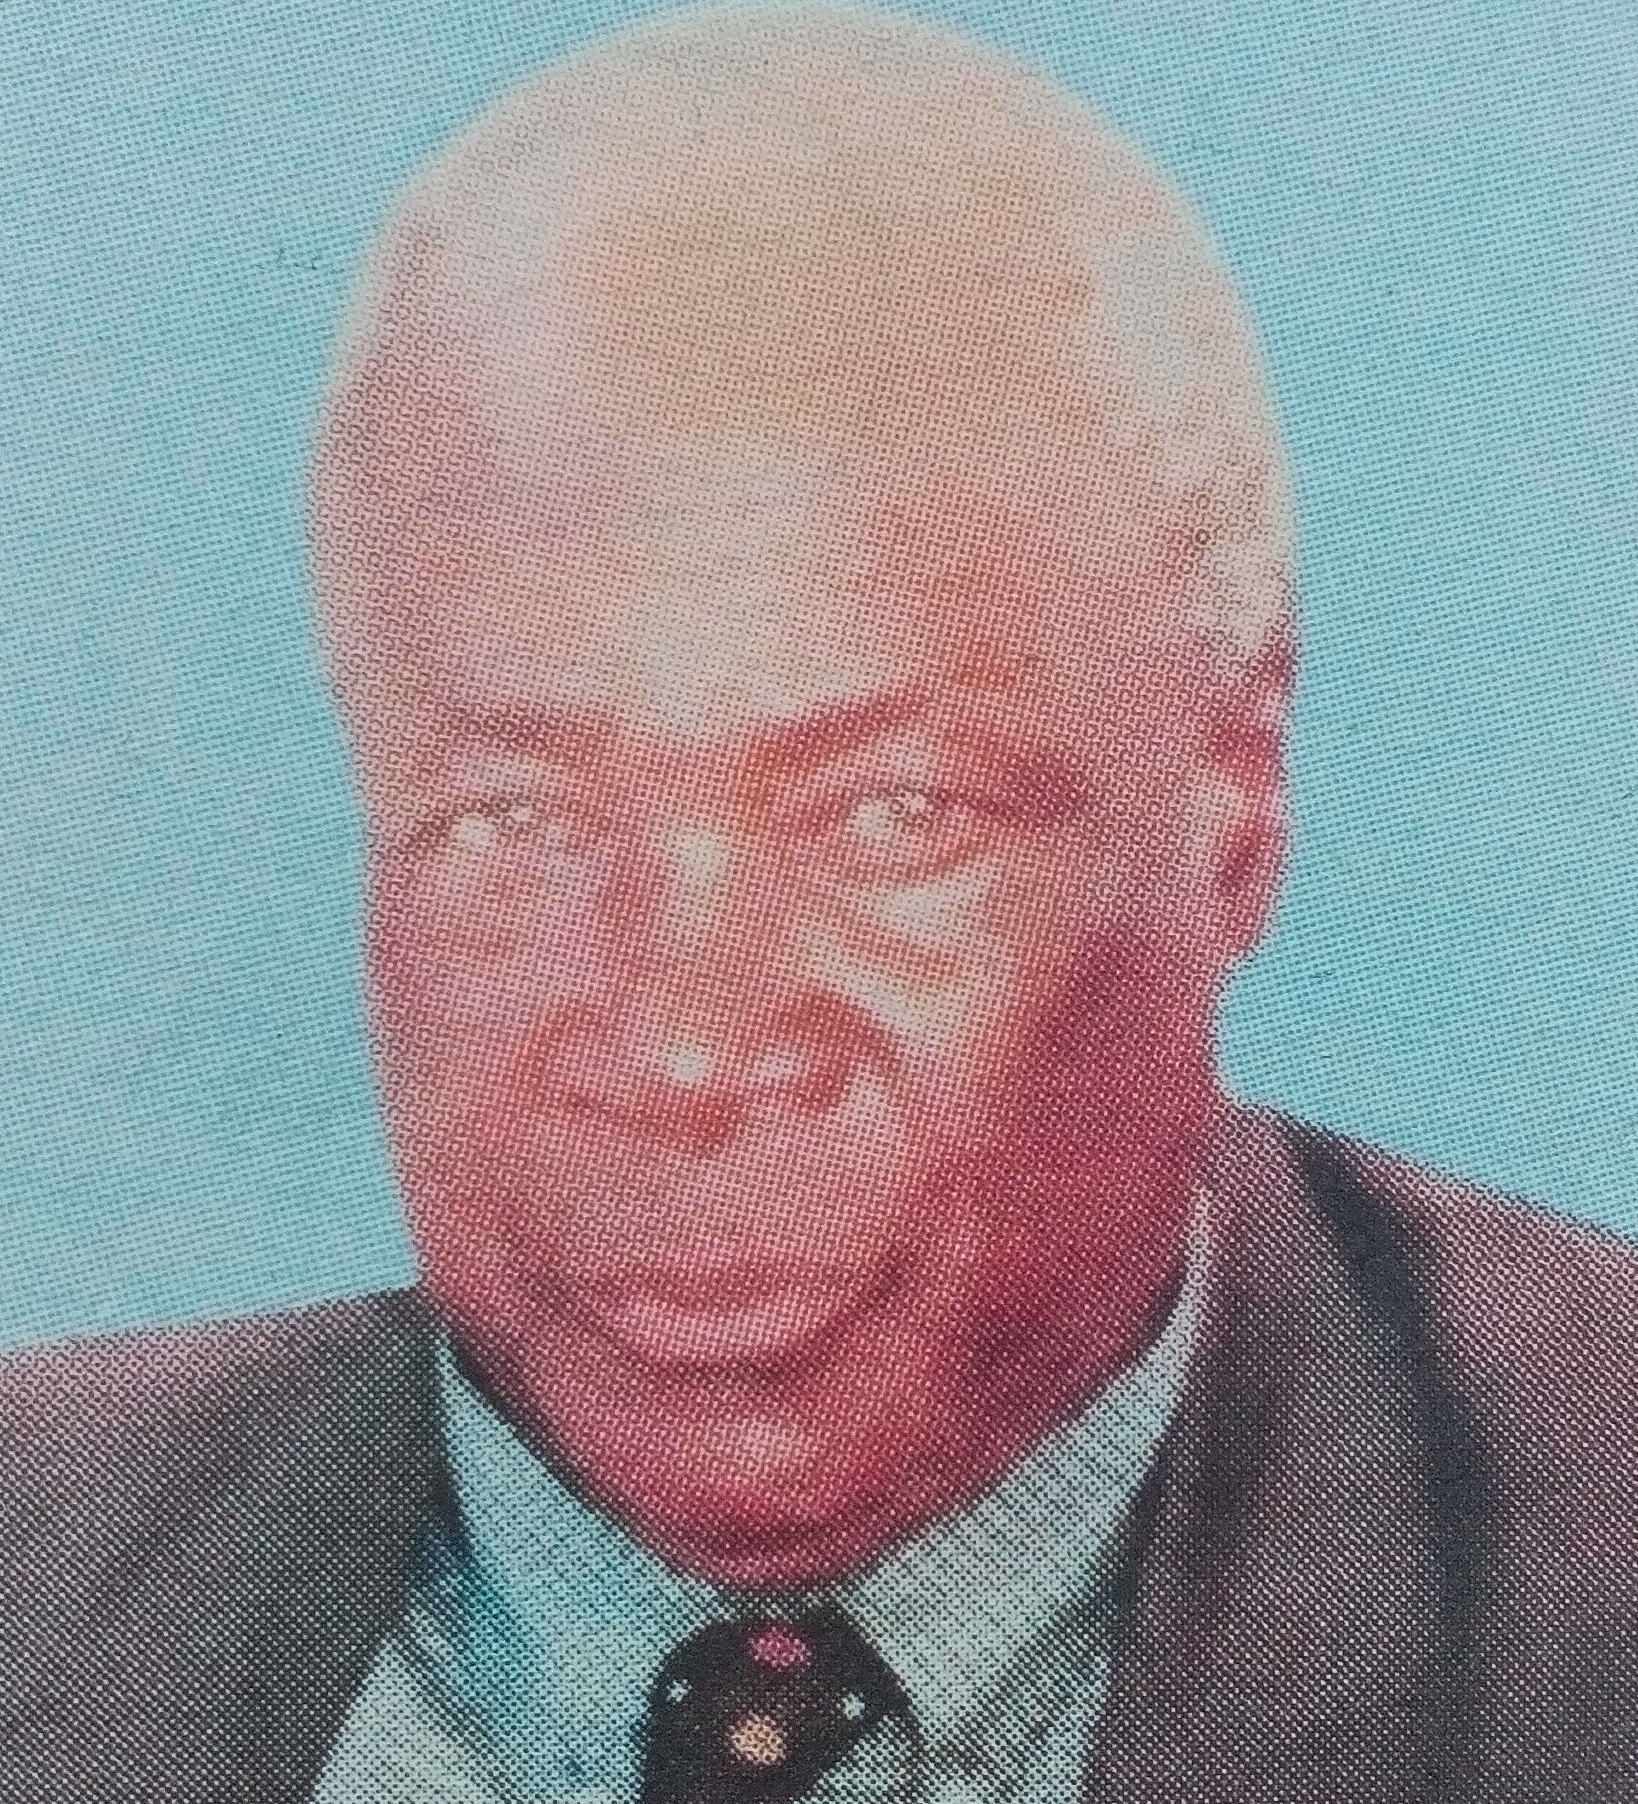 Obituary Image of Joshua Ondigo Agan